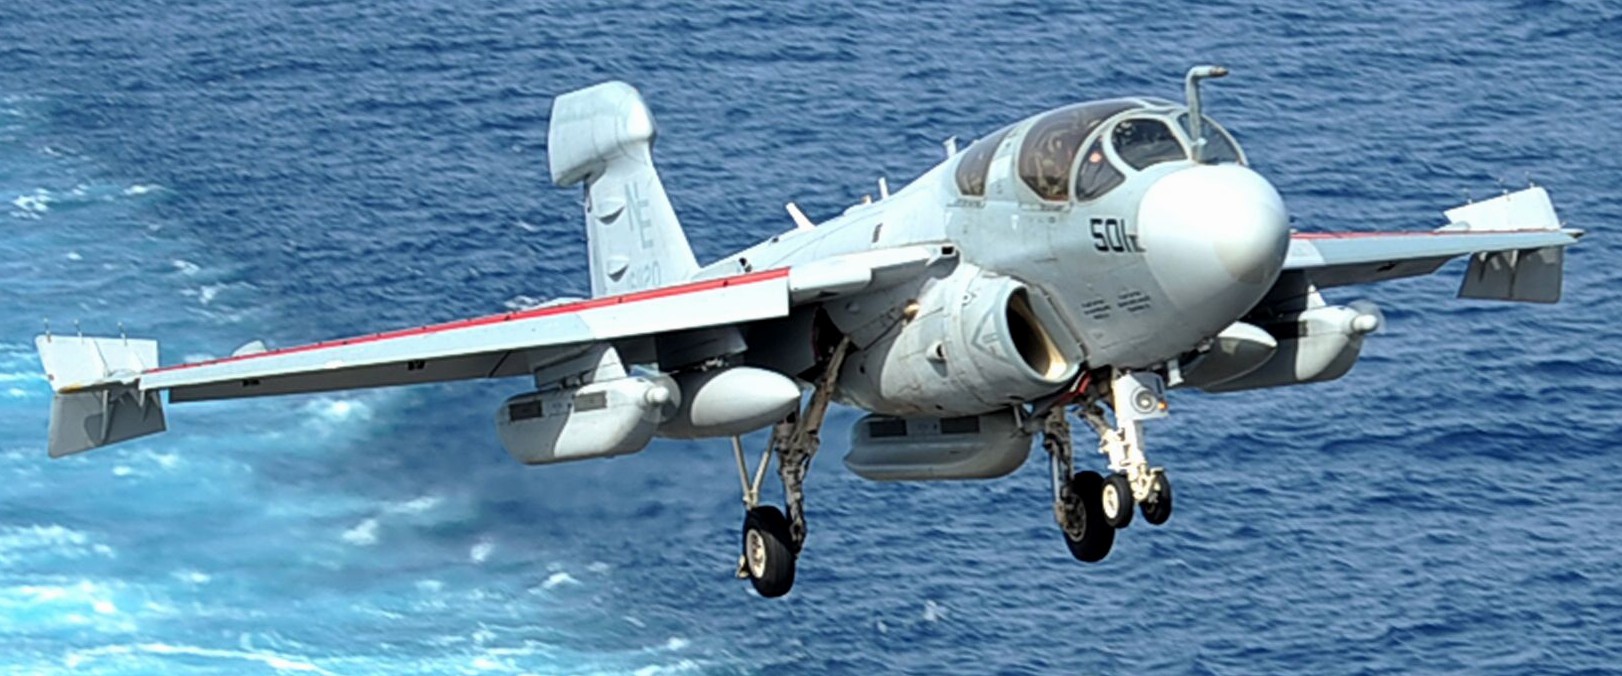 vaq-131 lancers electronic attack squadron vaqron us navy grumman ea-6b prowler carrier air wing cvw-2 uss abraham lincoln cvn-72 41